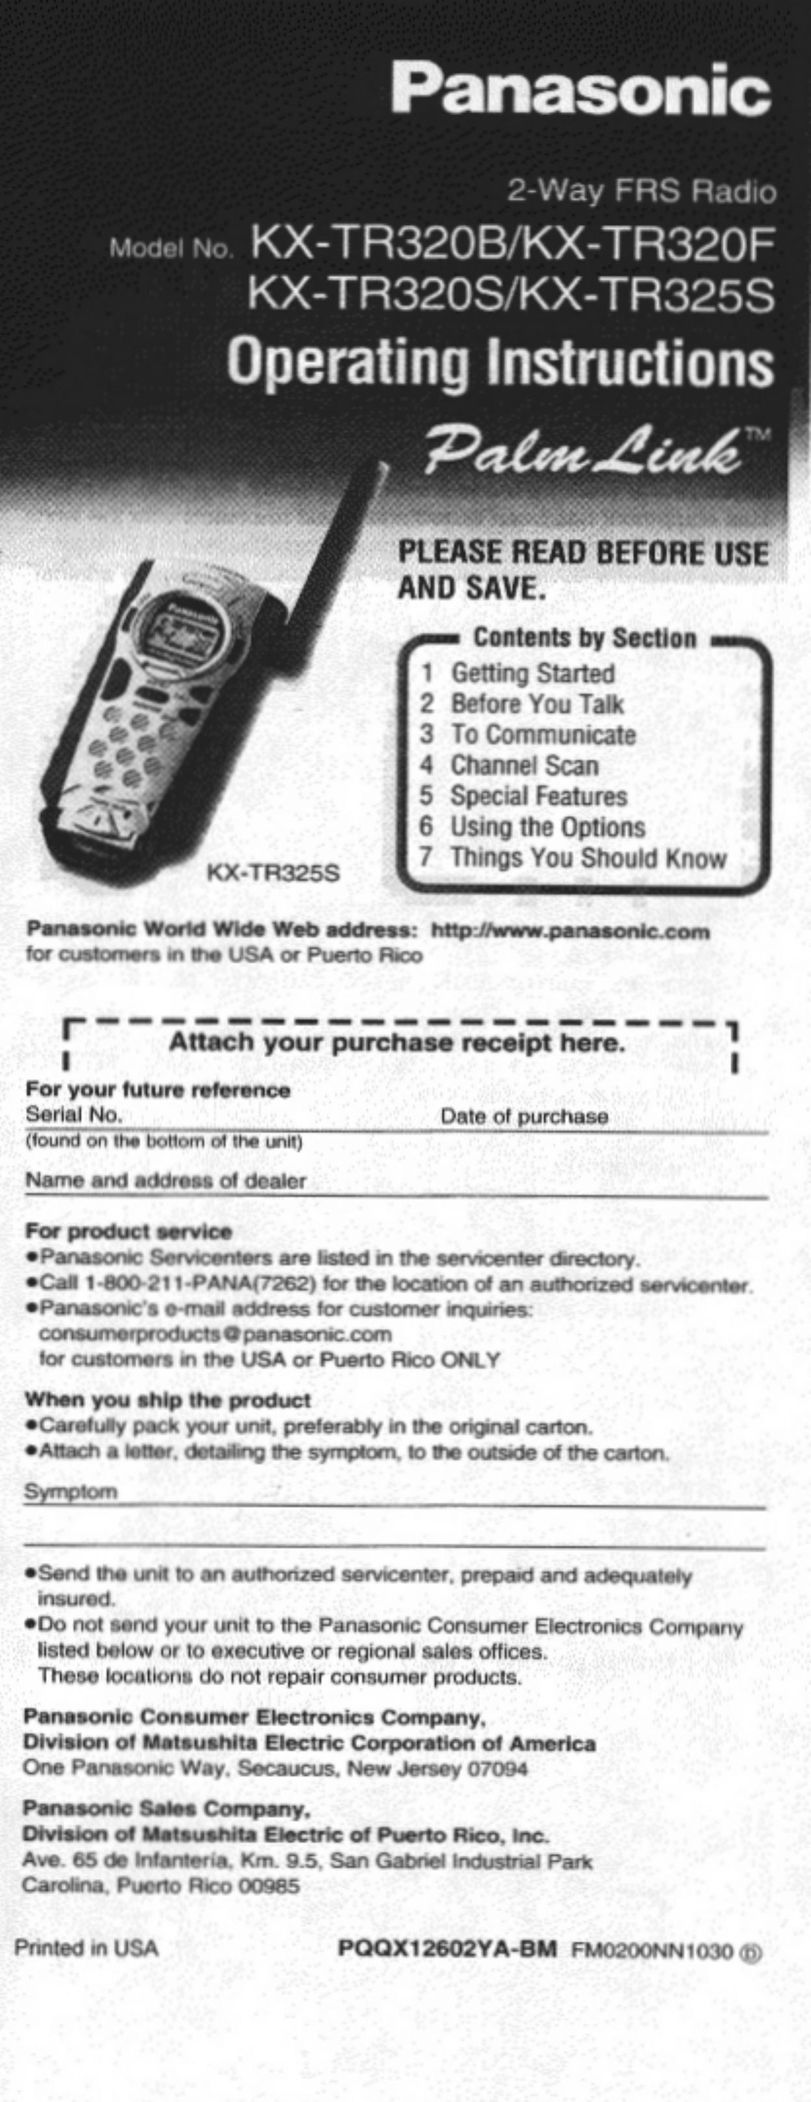 Panasonic KX-TR320B Radio User Manual